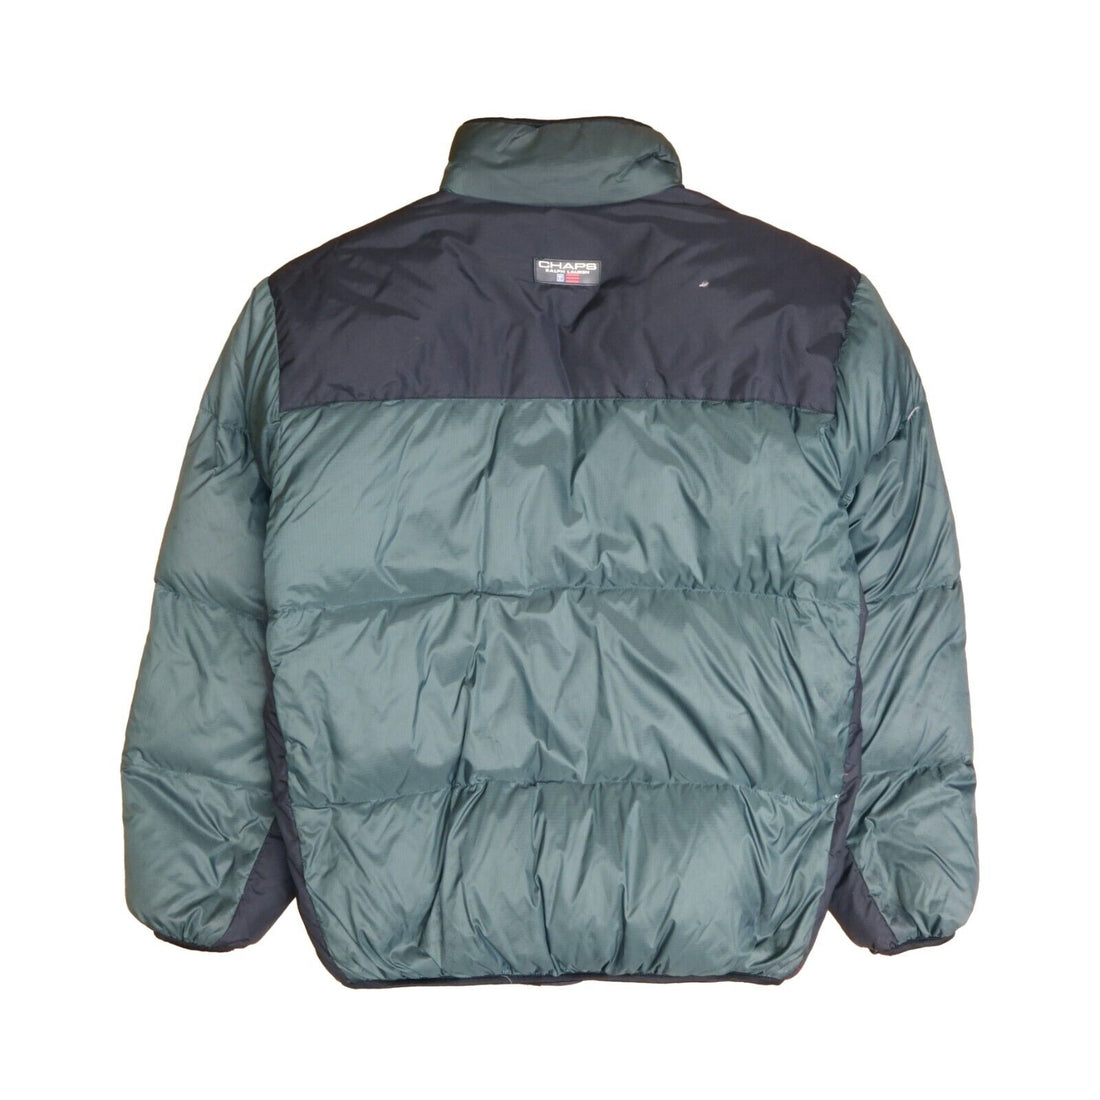 Vintage Chaps Ralph Lauren Puffer Jacket Size Medium Green Insulated